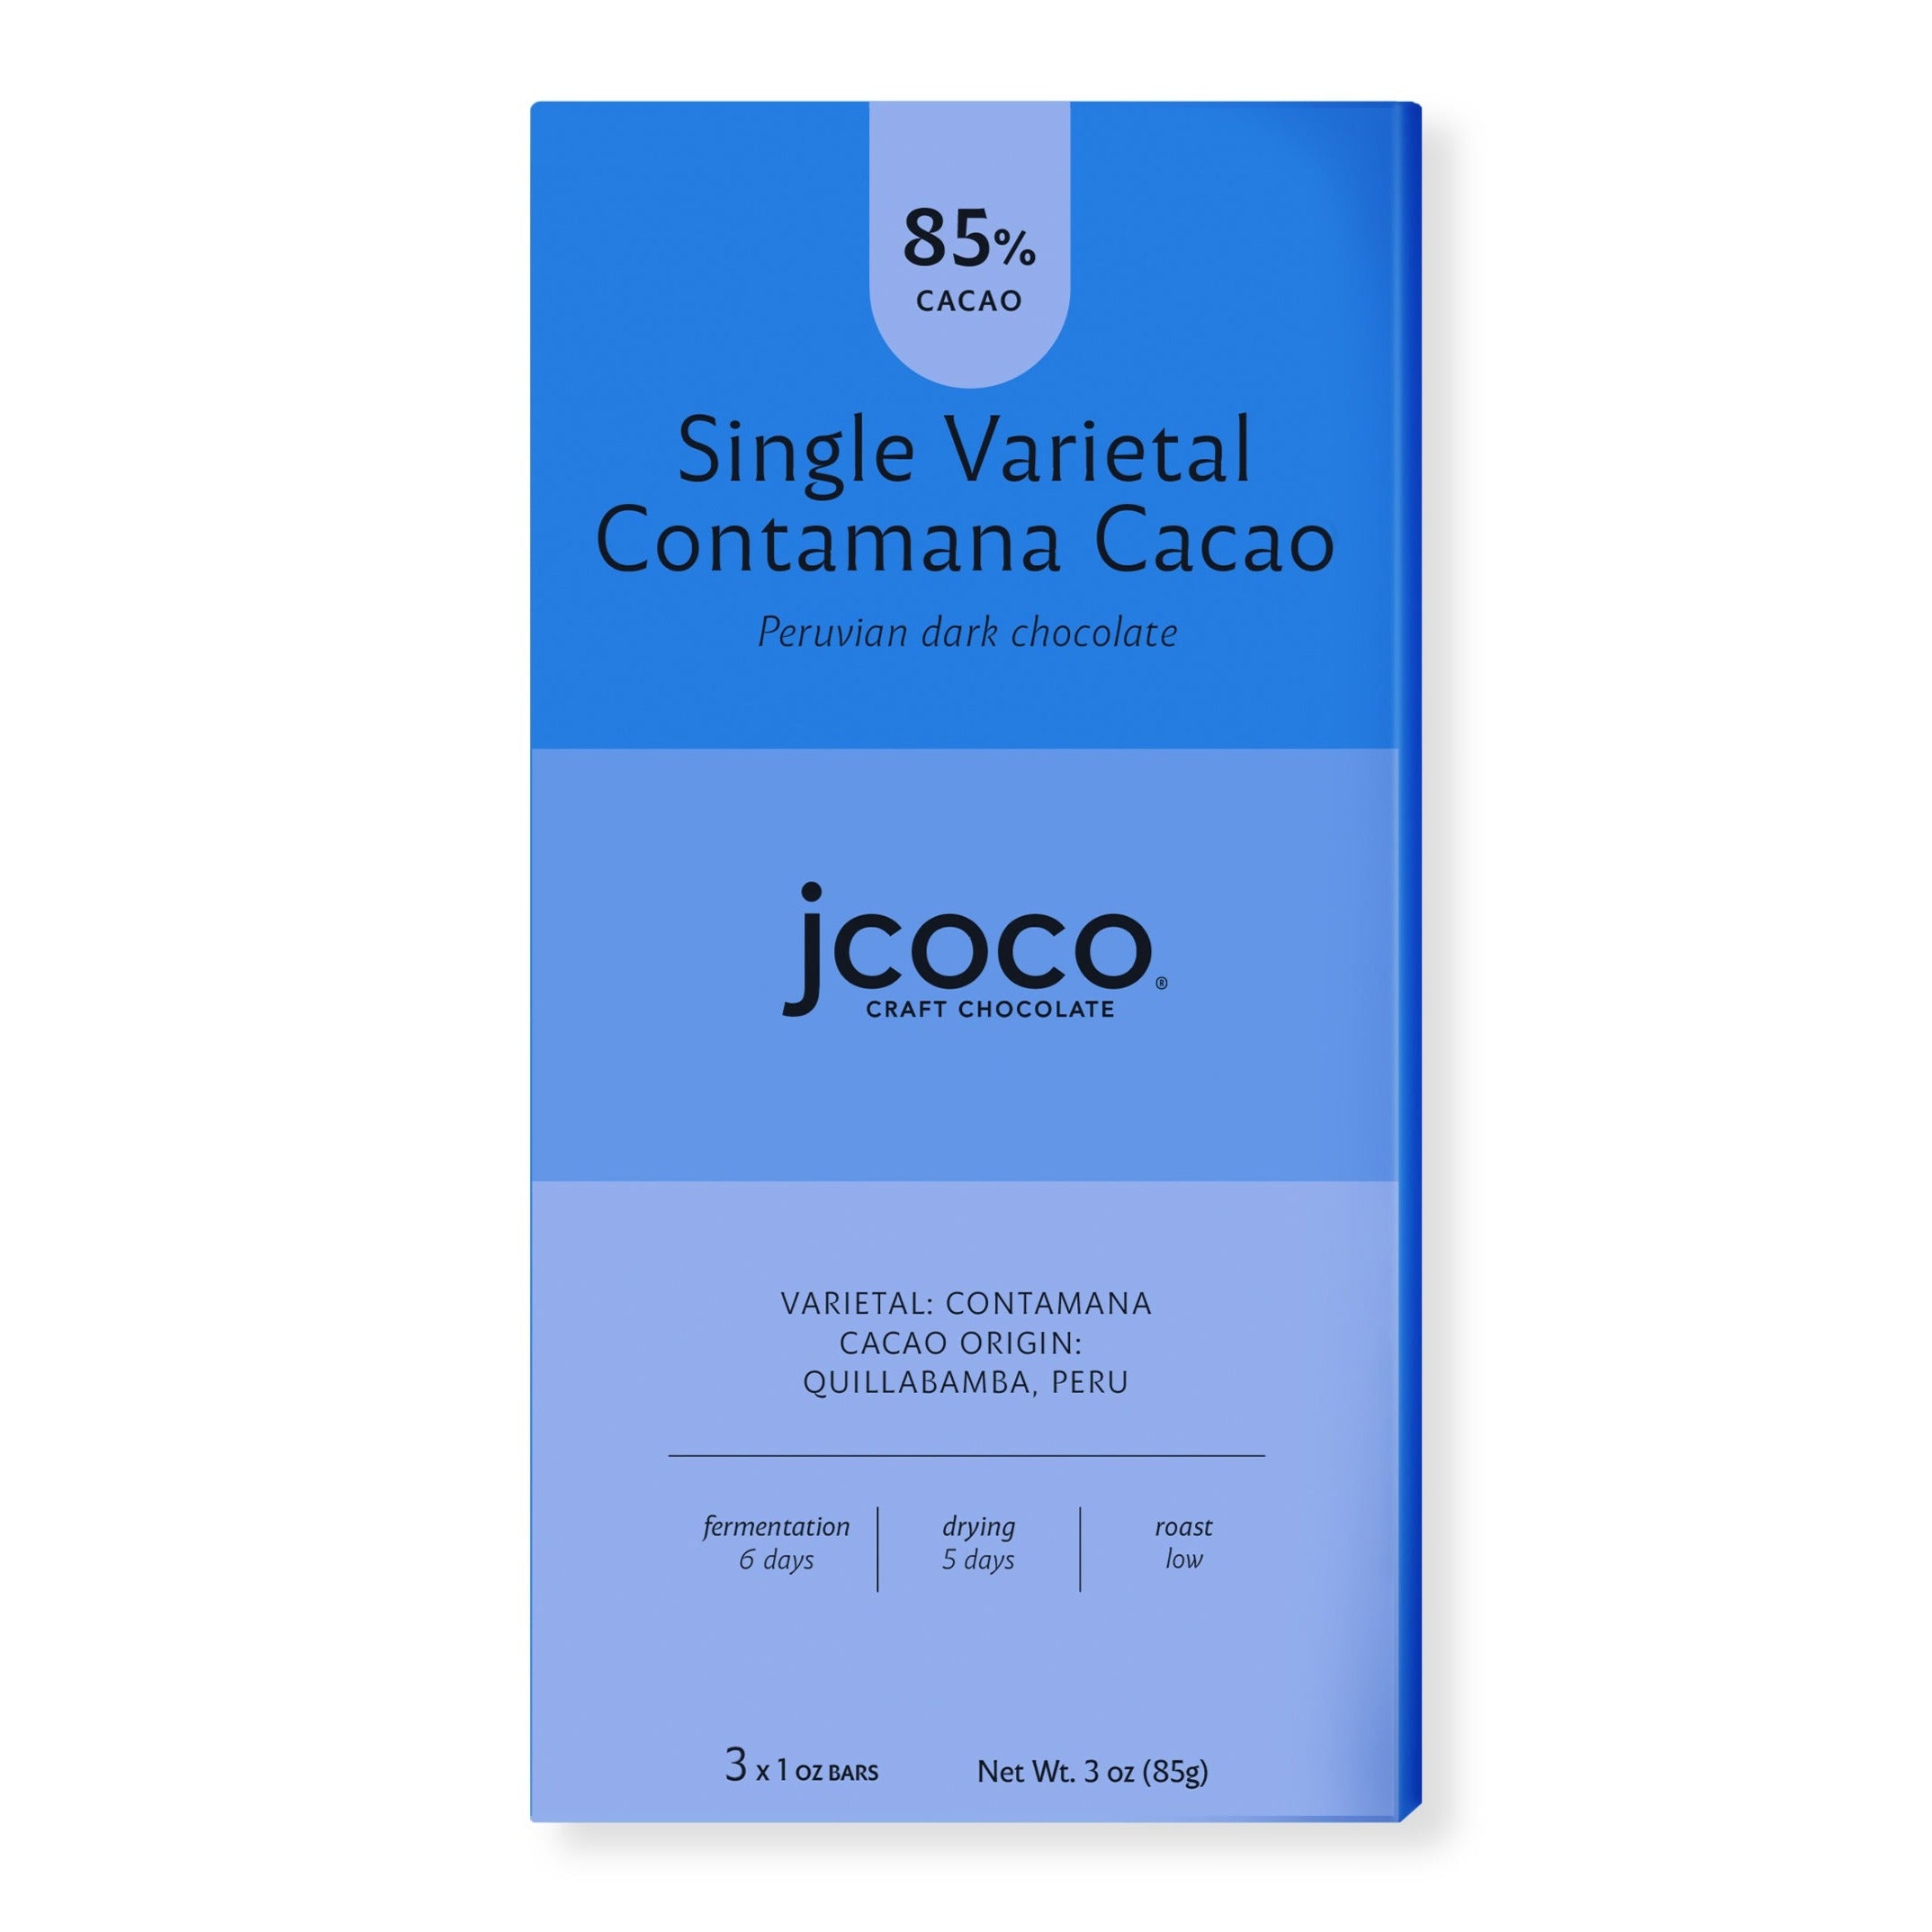 Single Varietal Contamana Cacao